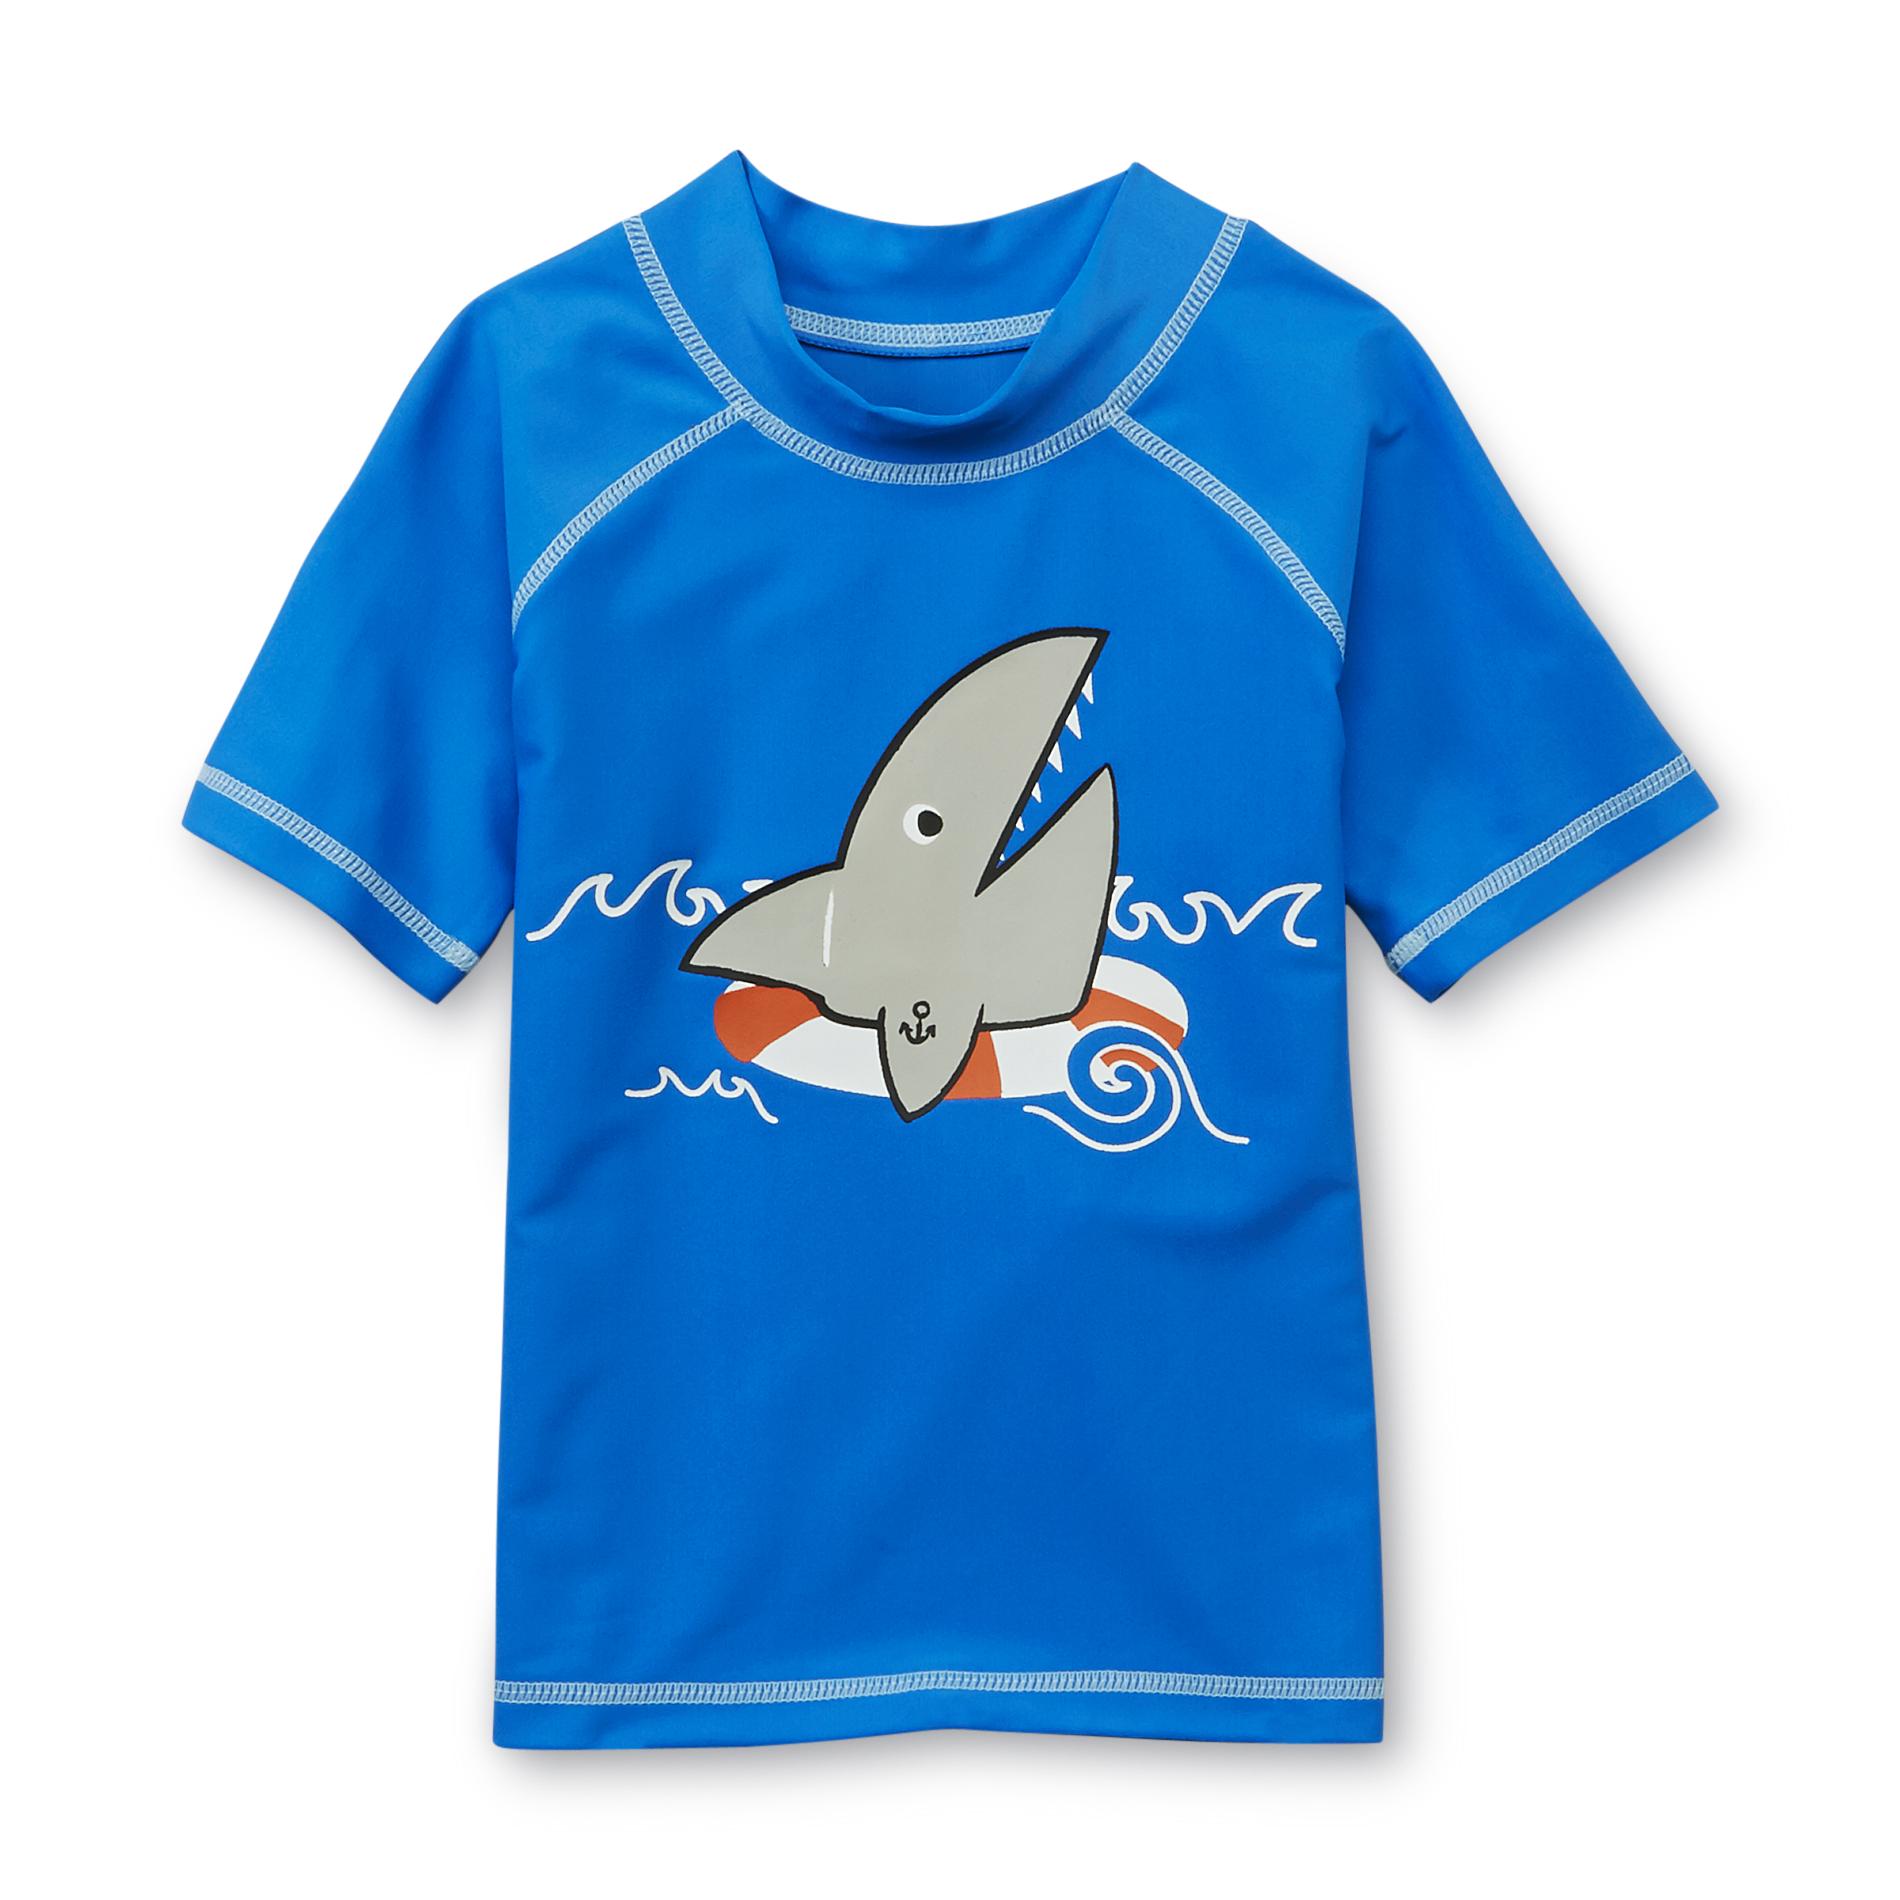 WonderKids Infant & Toddler Boy's Rash Guard Swim Shirt - Shark